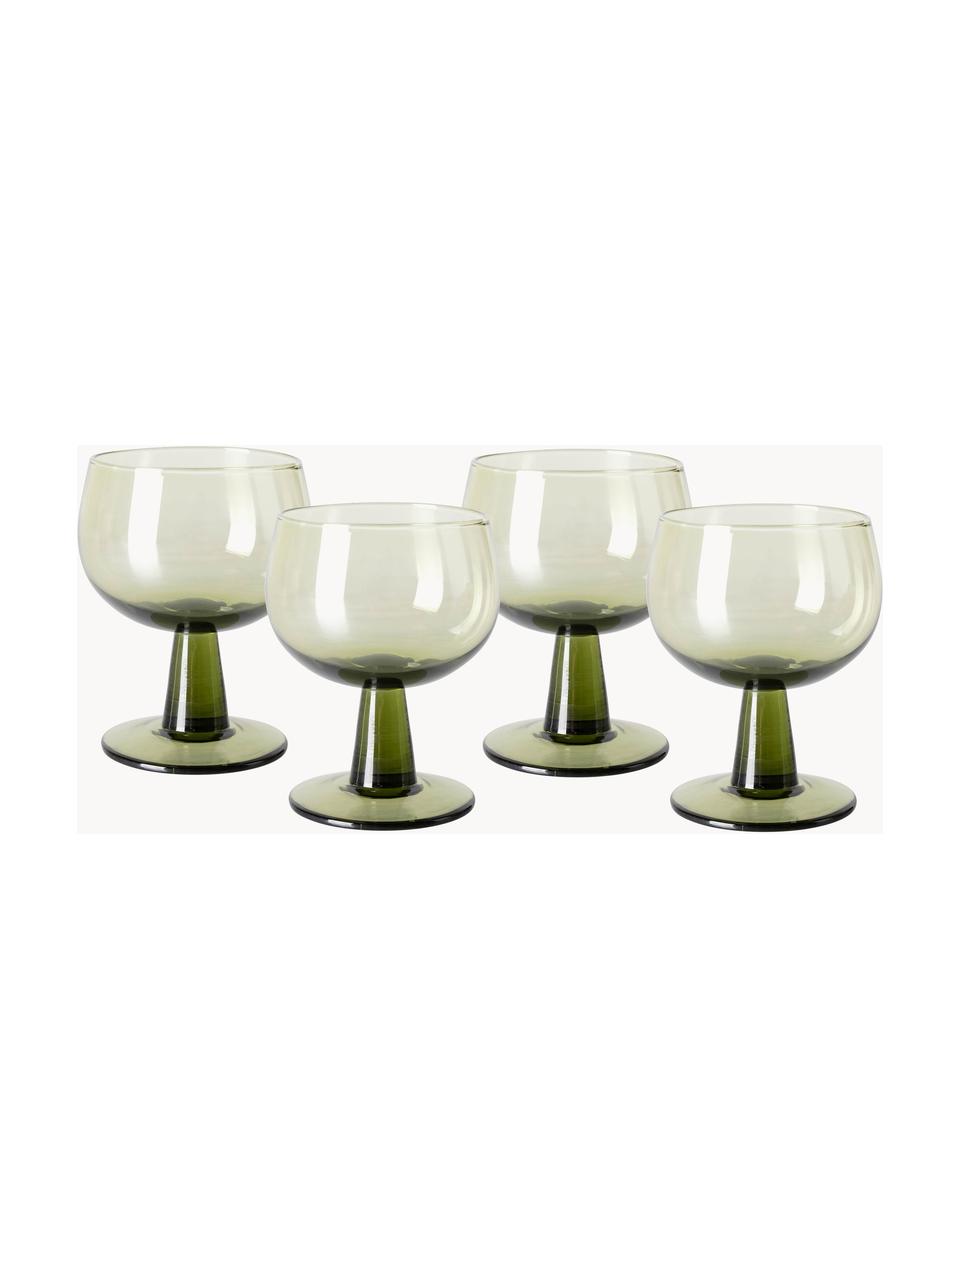 Bicchieri per vino The Emeralds 4 pz, Vetro, Verde oliva trasparente, Ø 9 x Alt. 12 cm, 250 ml